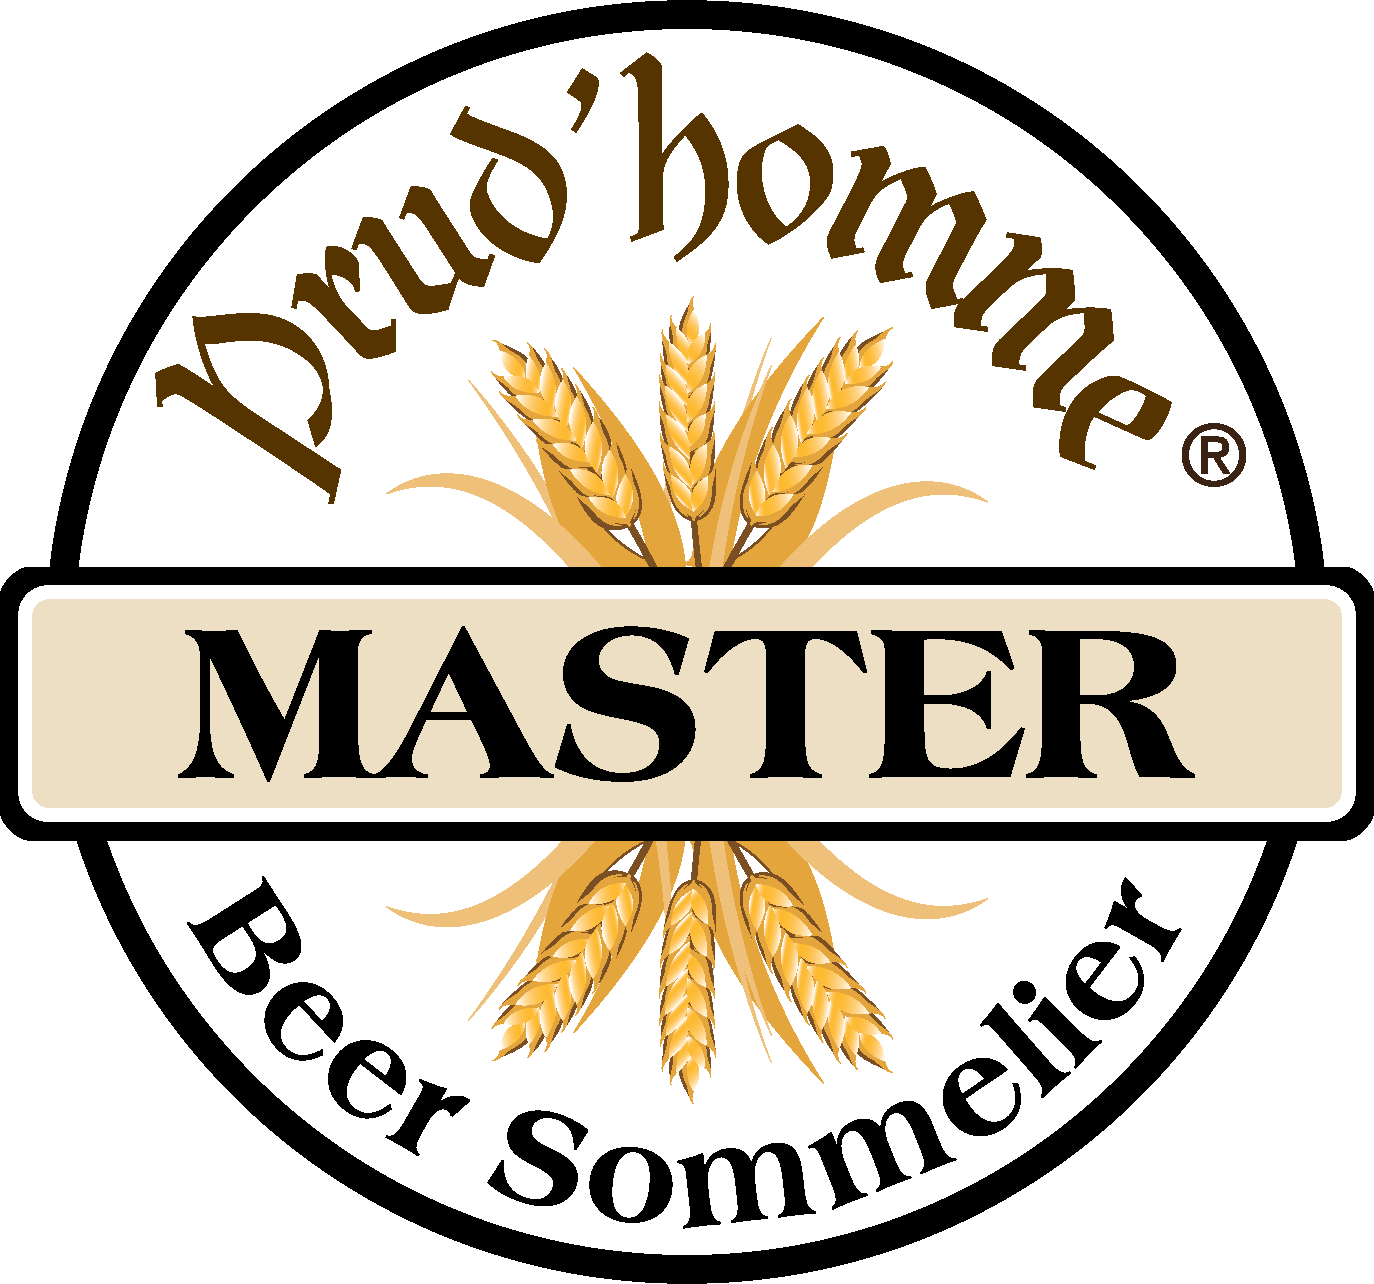 Master Beer Sommelier